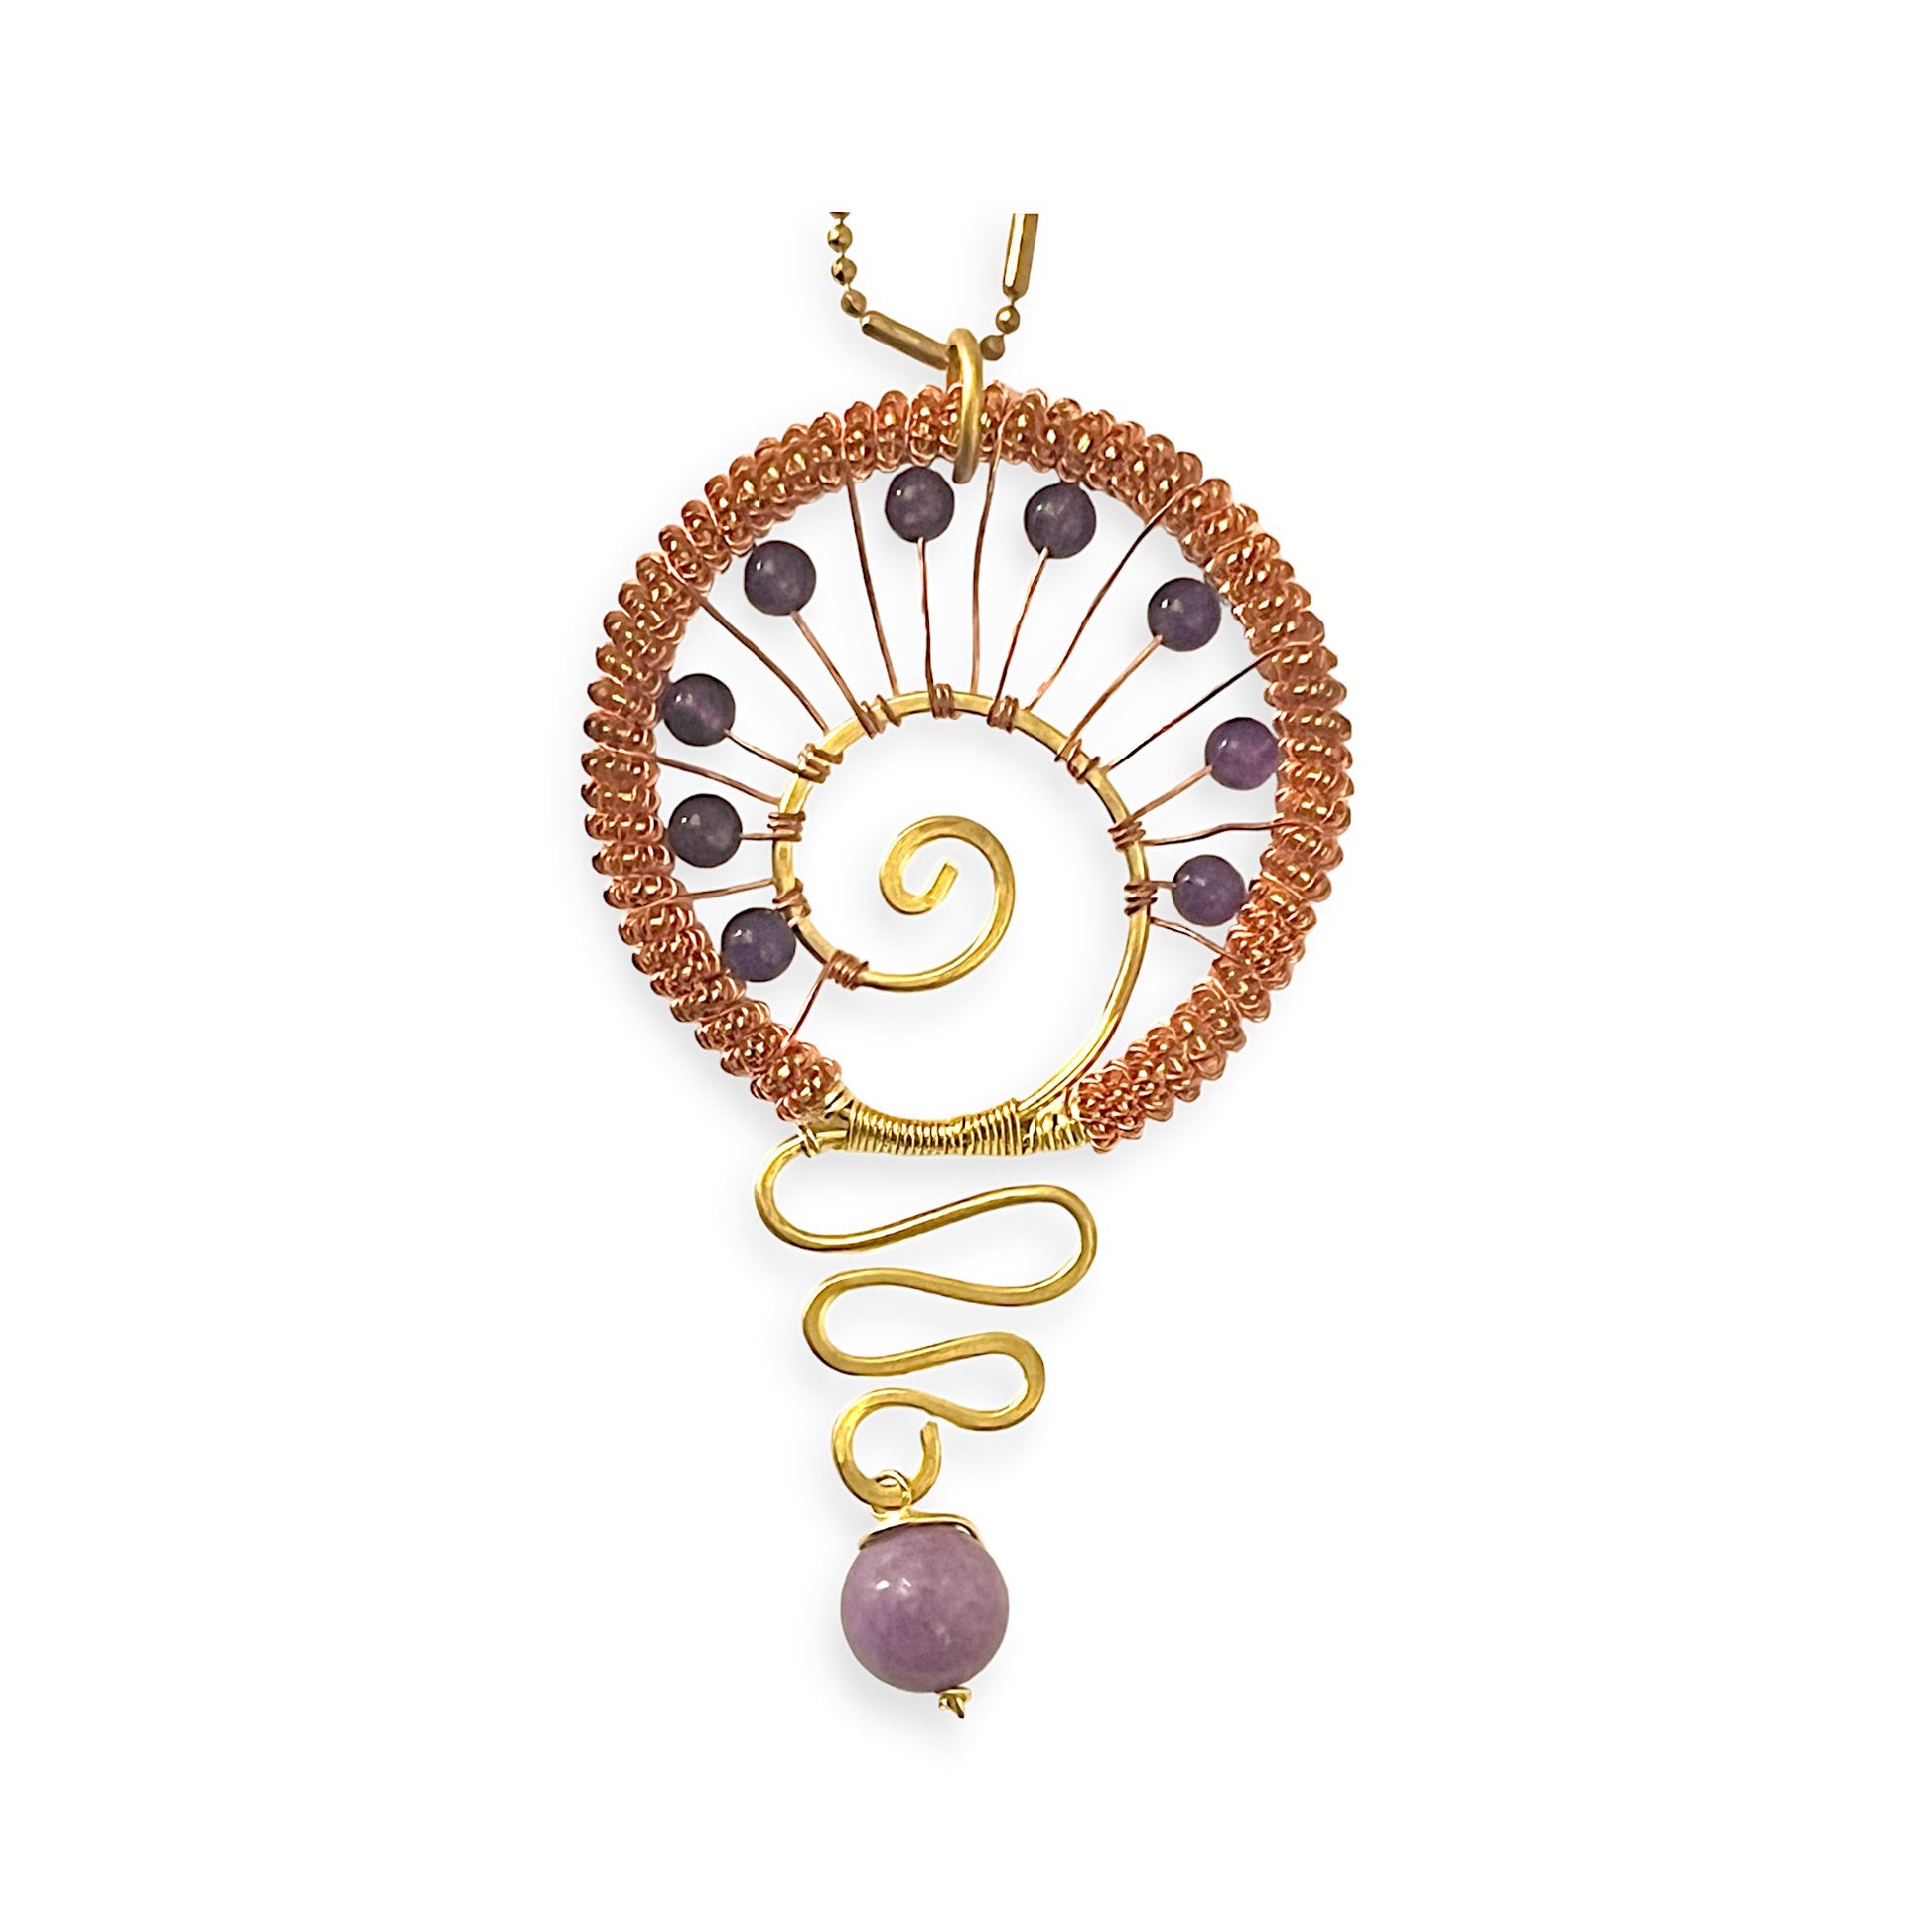 Seashell inspired pendant necklace - Sundara Joon